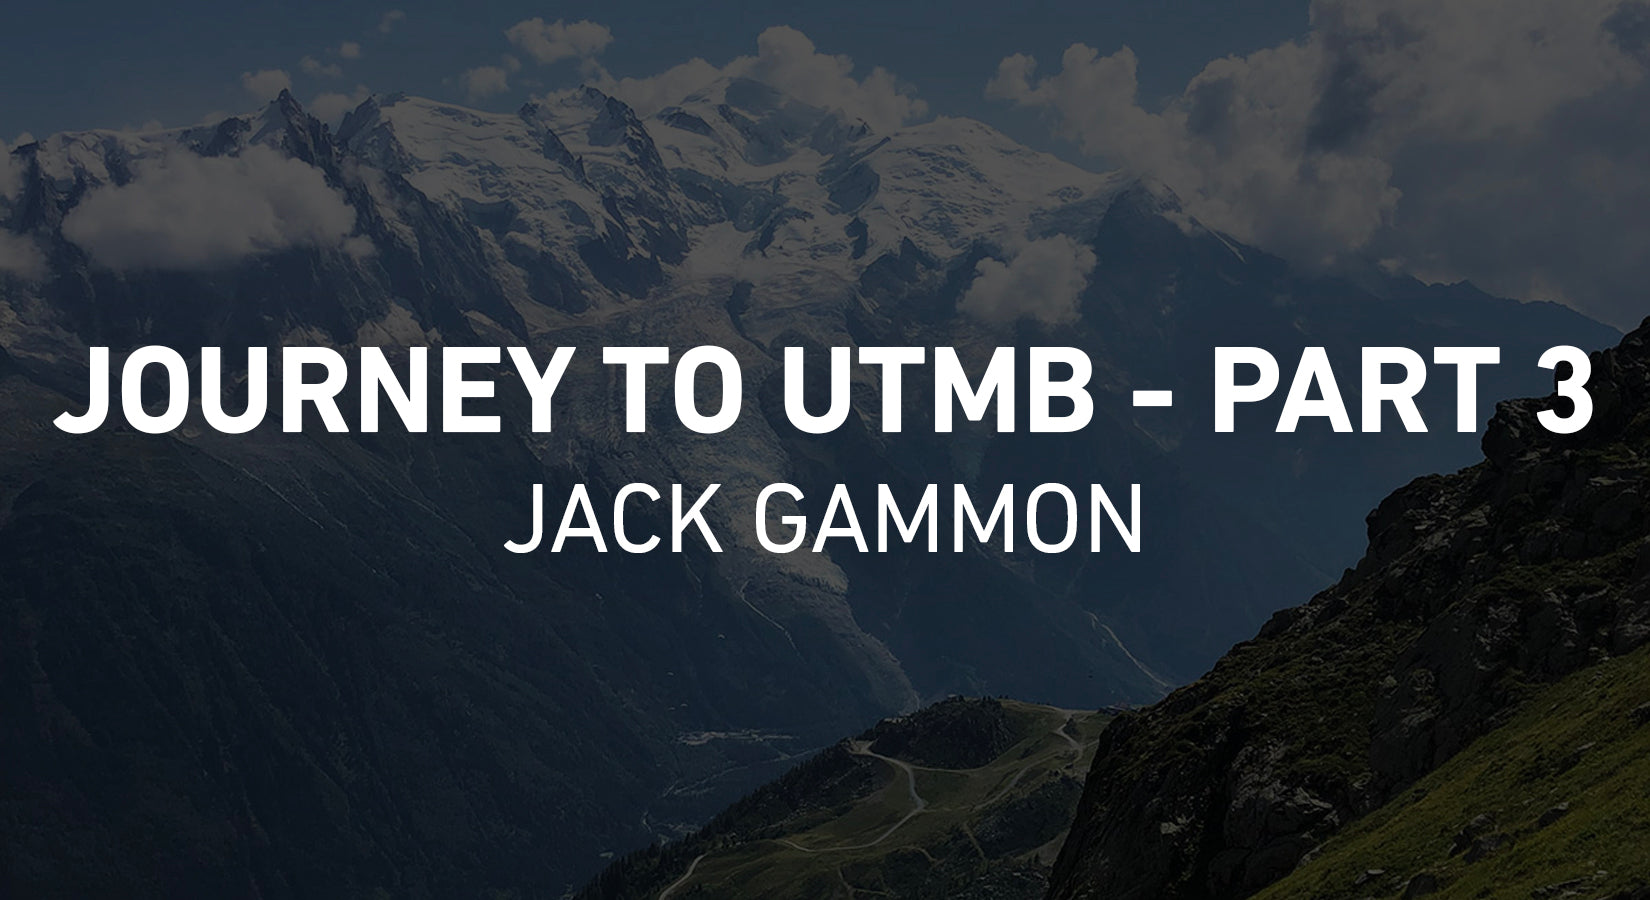 Jack Gammon - Journey to UTMB - Part 3